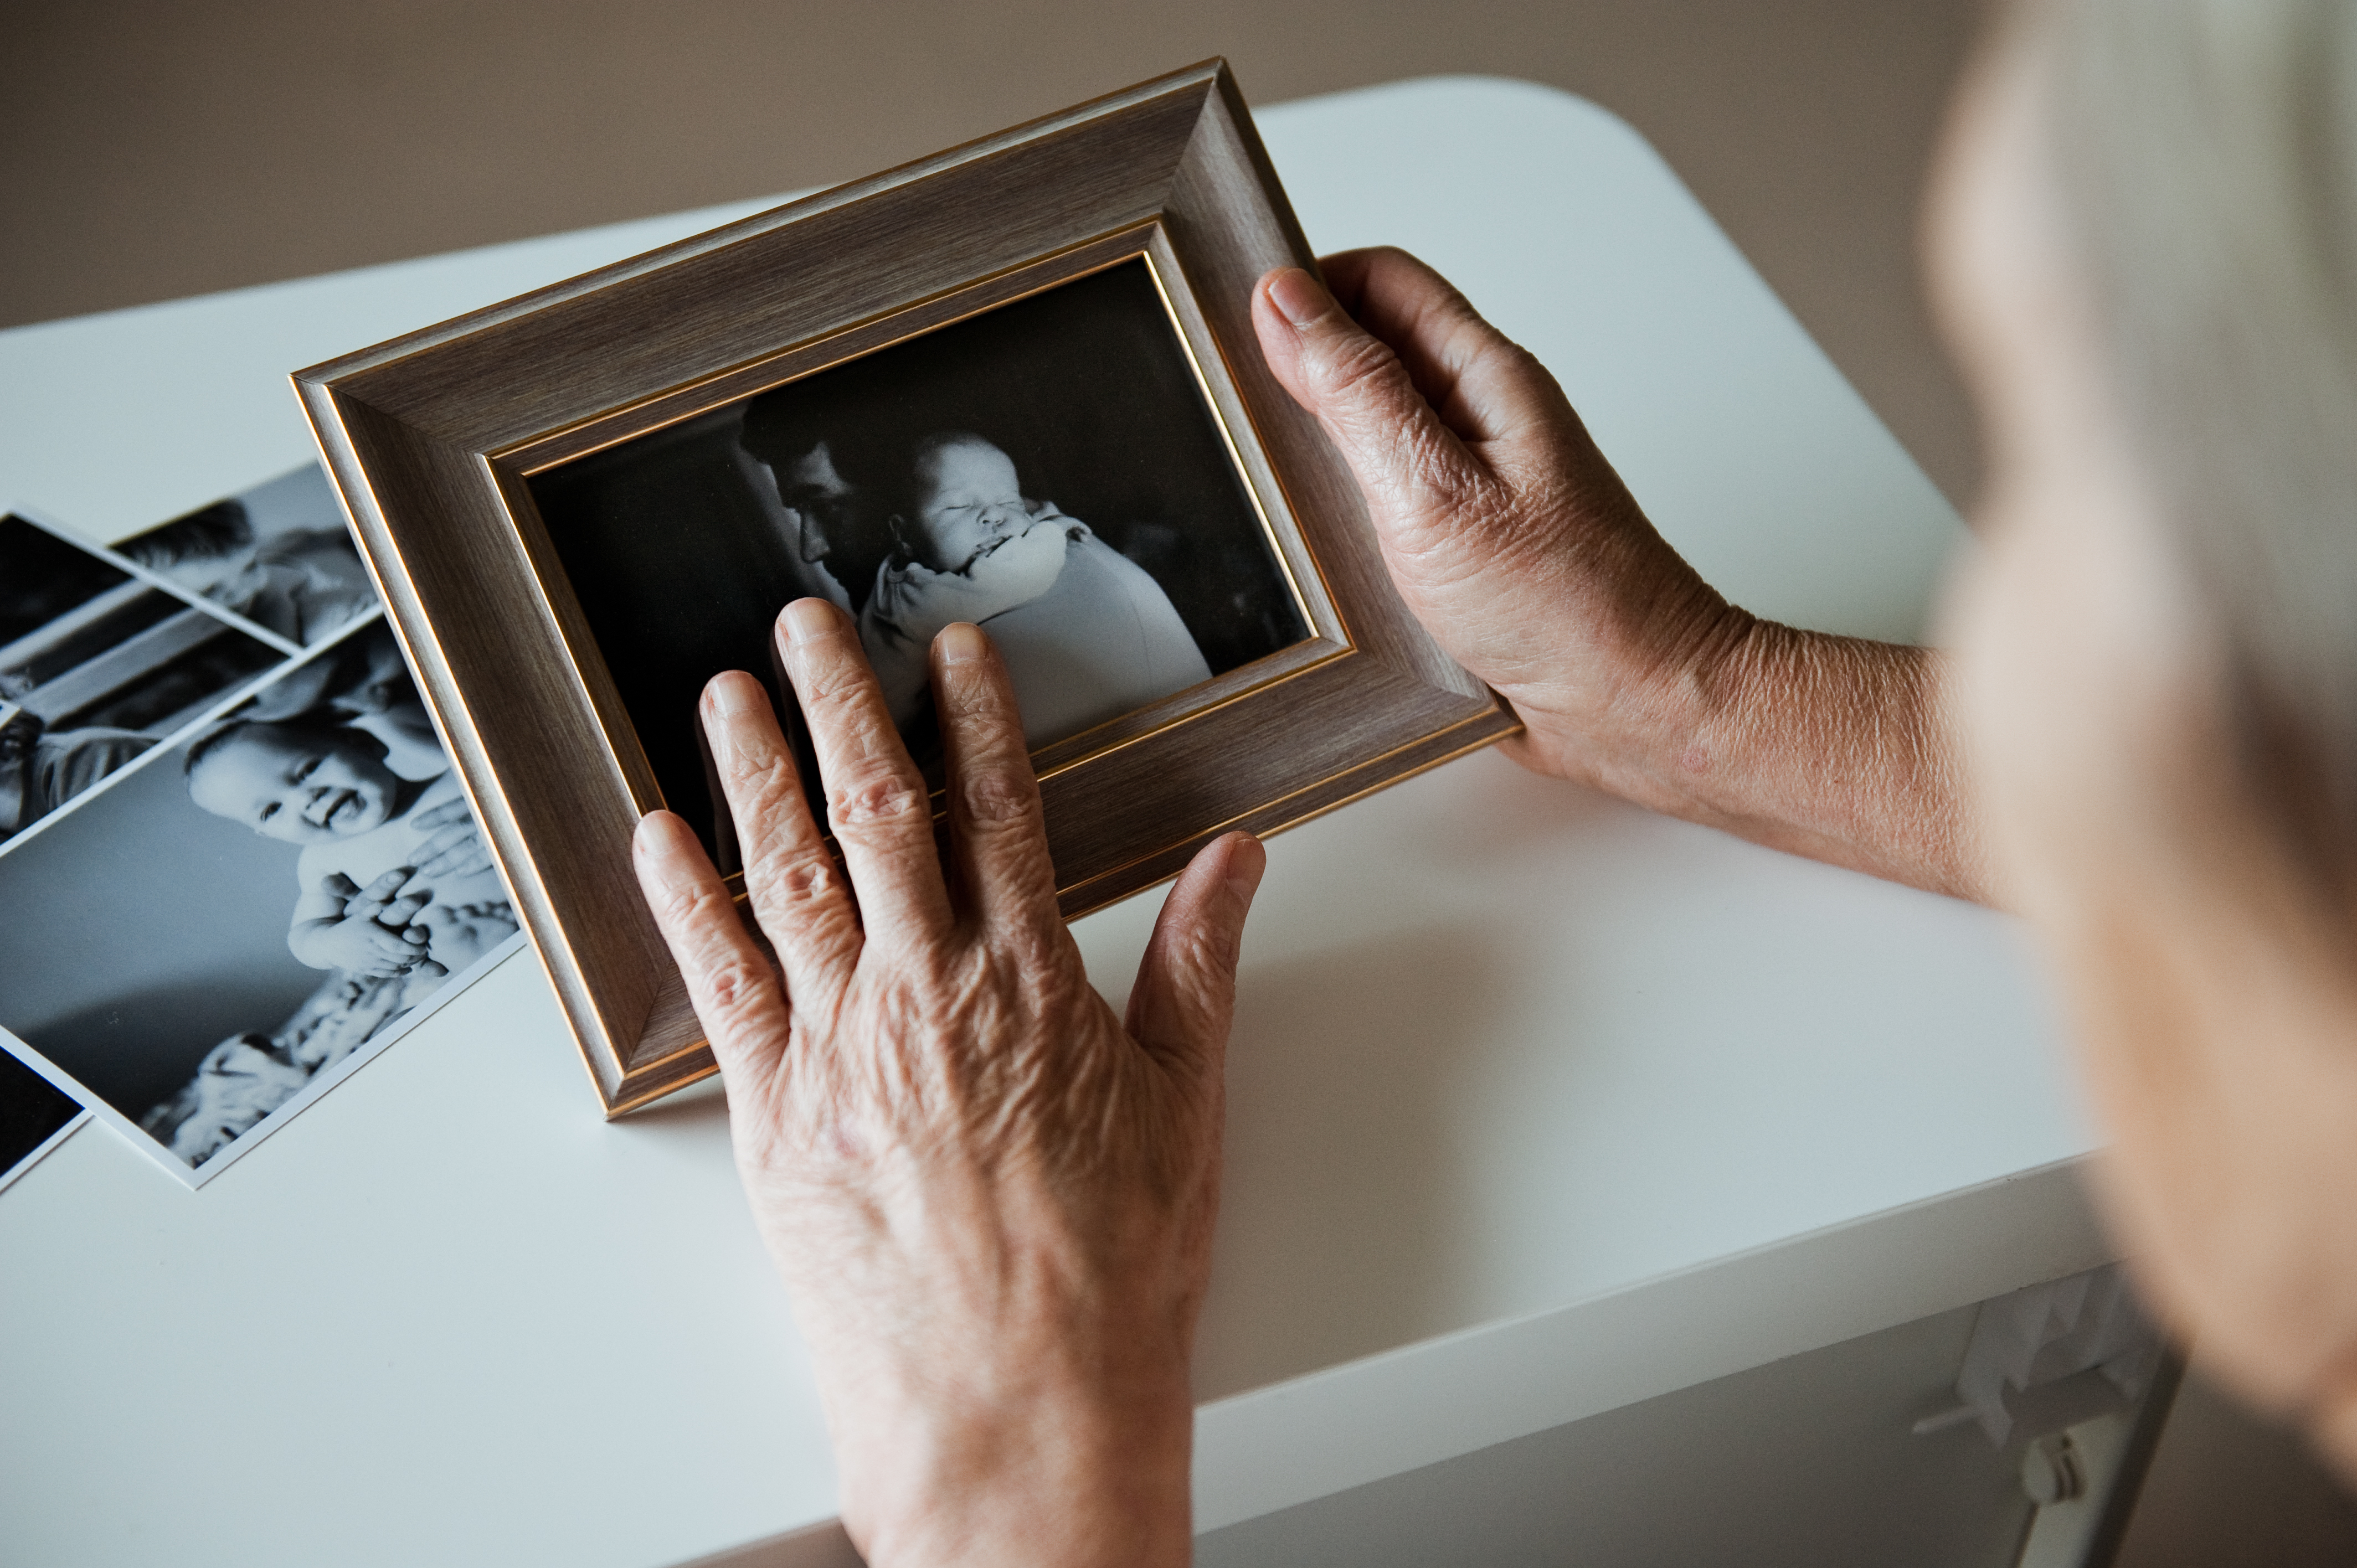 An elderly woman is holding a frame | Source: Shutterstock